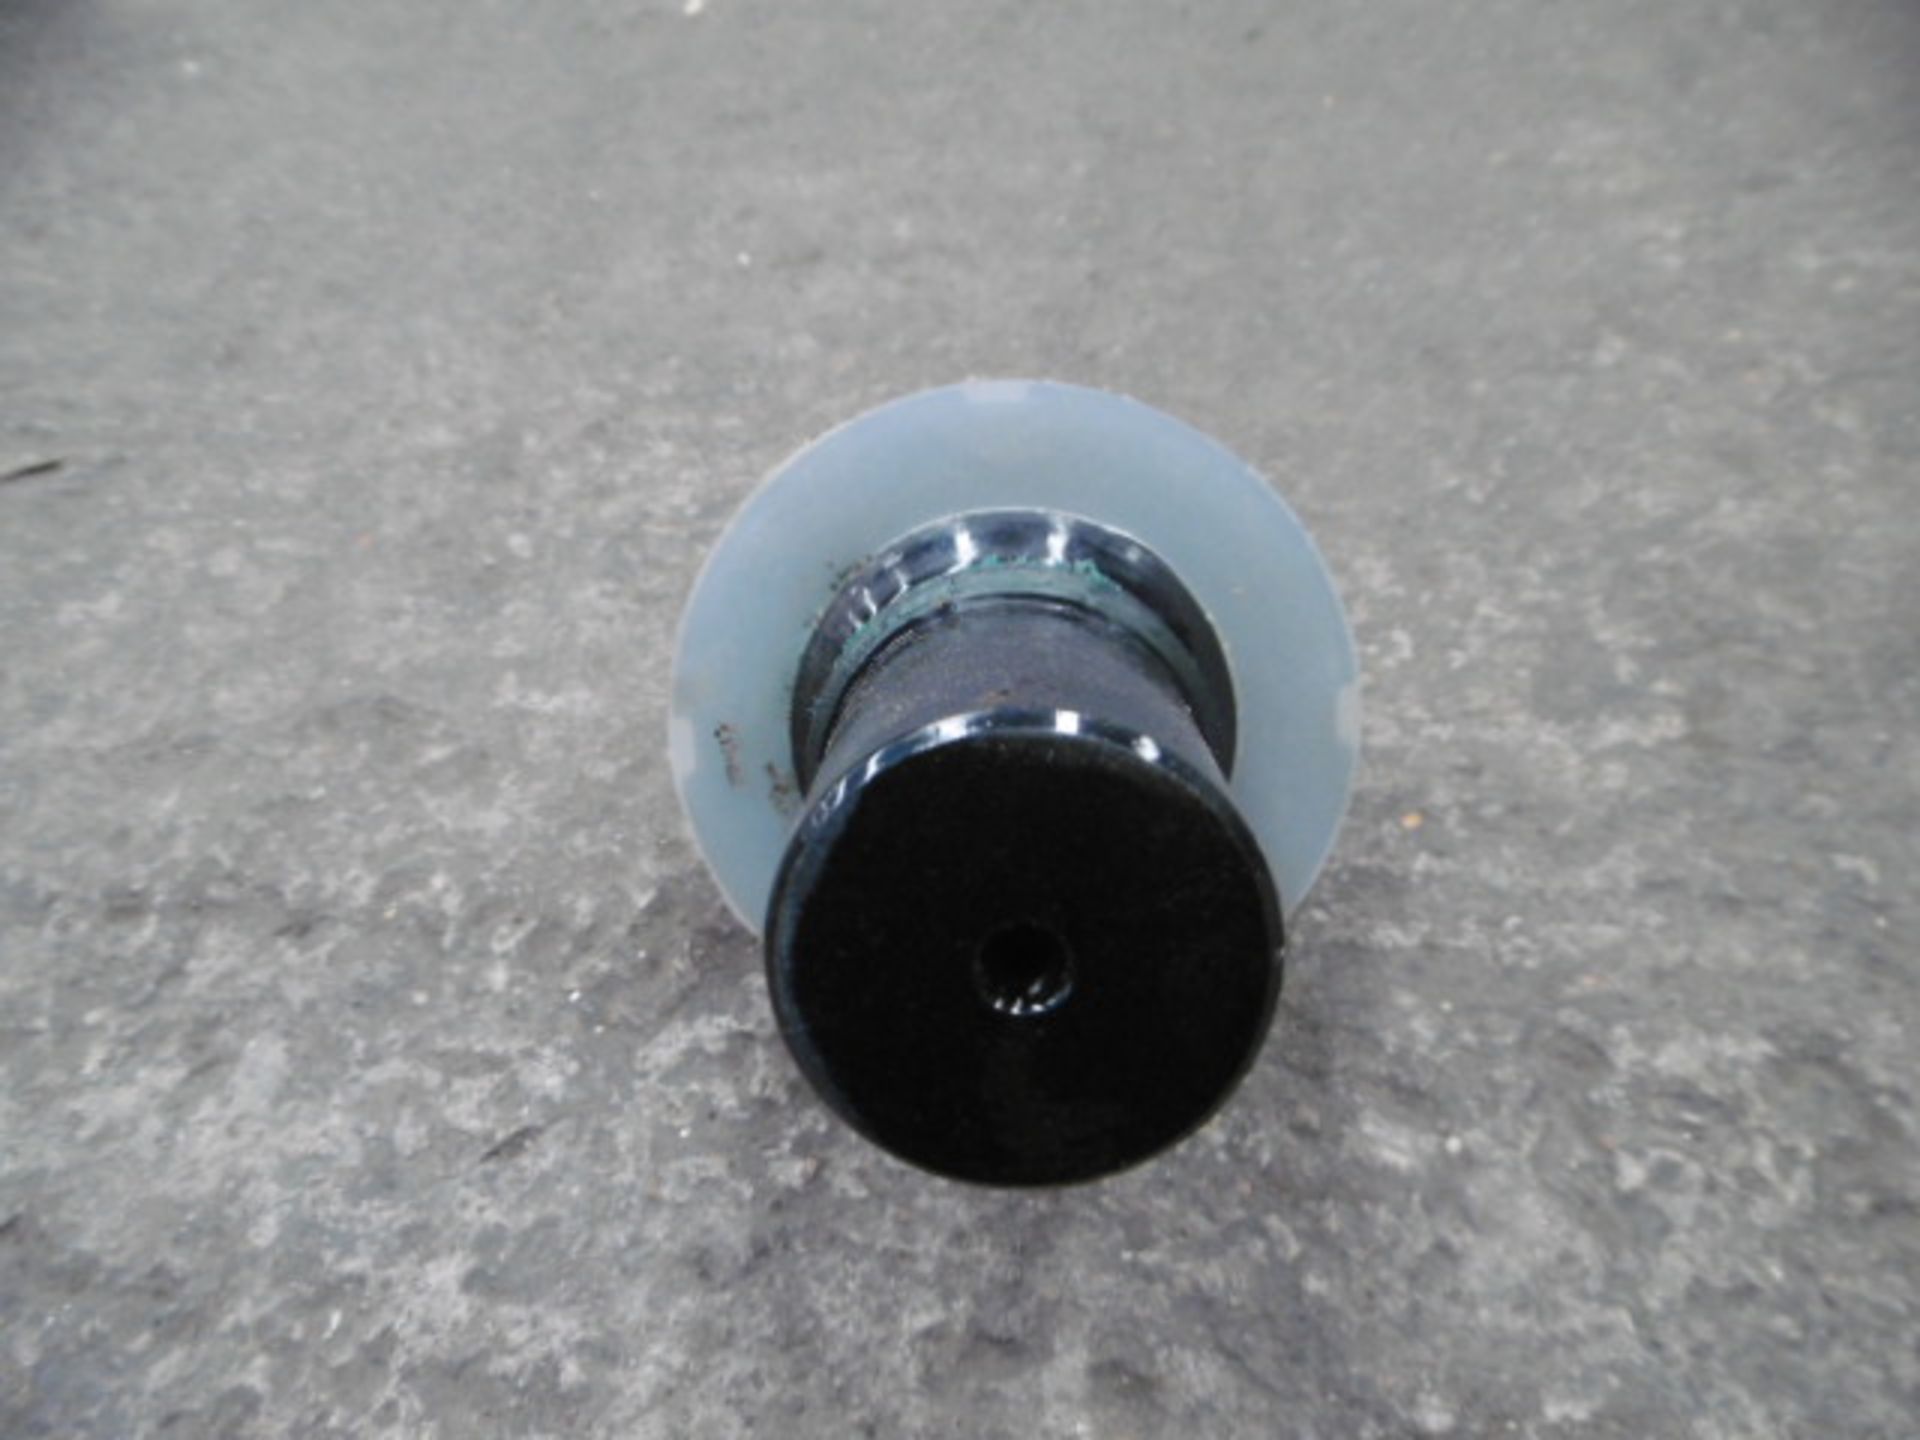 12 x No. 59 A/C Bomb Nose Plugs - Image 4 of 7